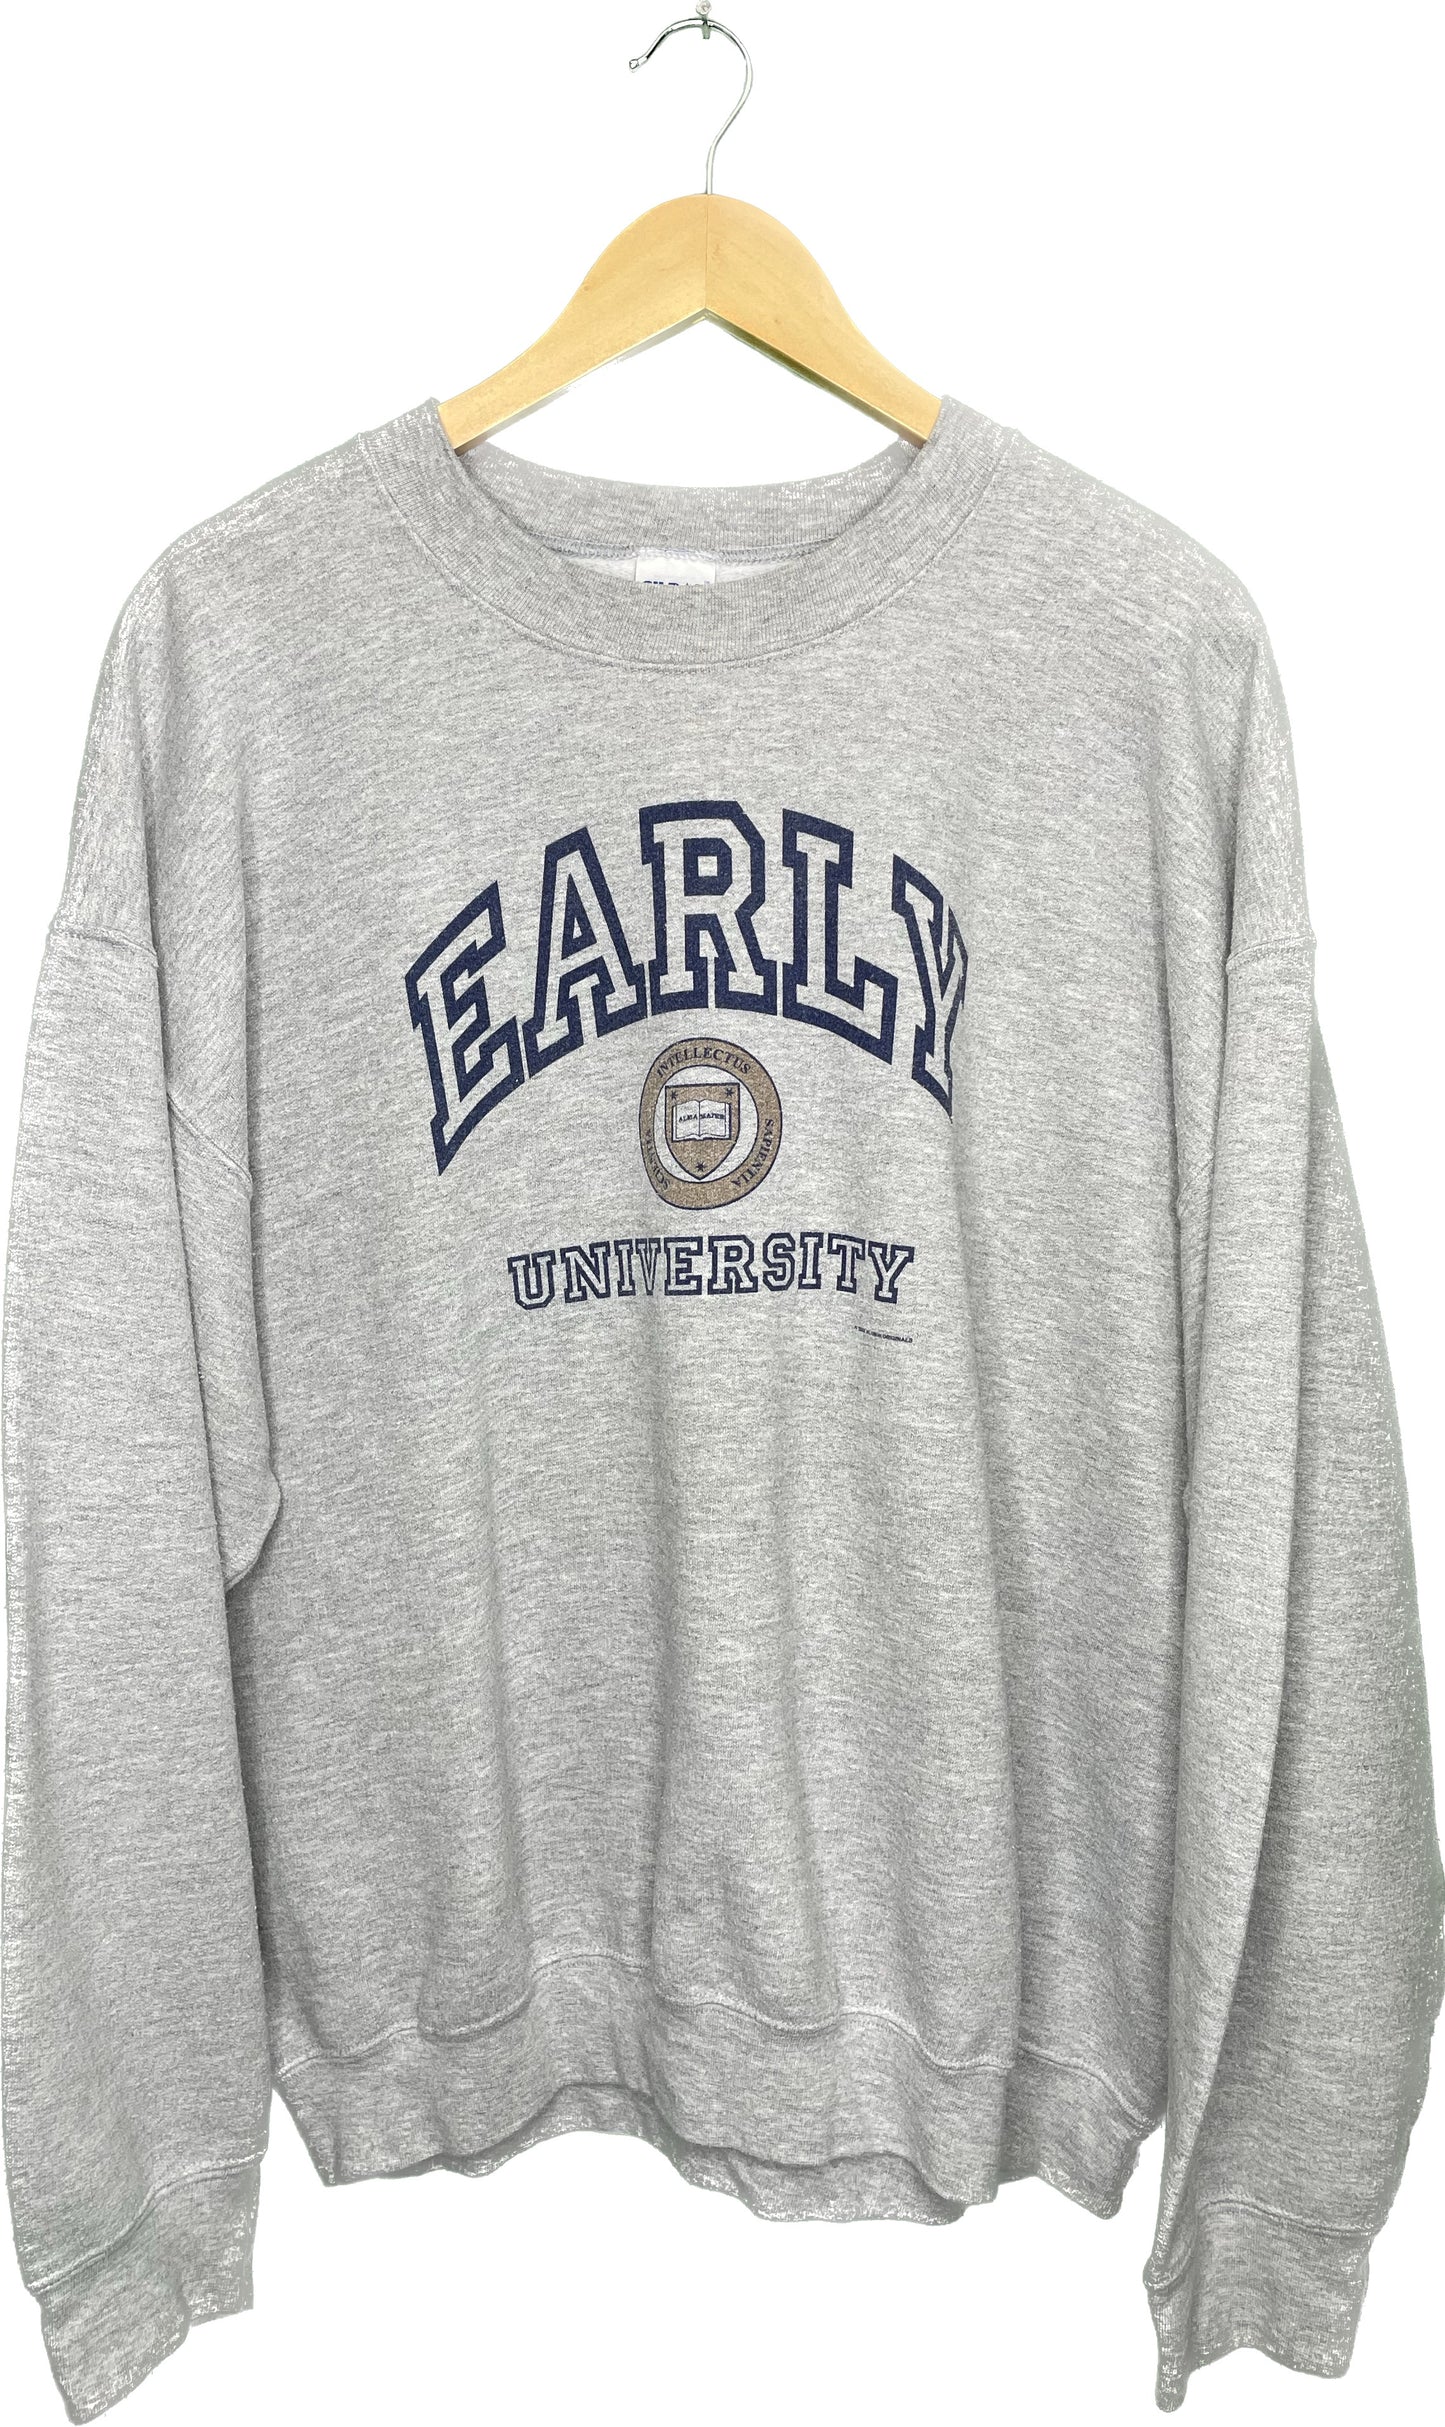 Vintage XL/2XL Early College Crewneck Sweatshirt